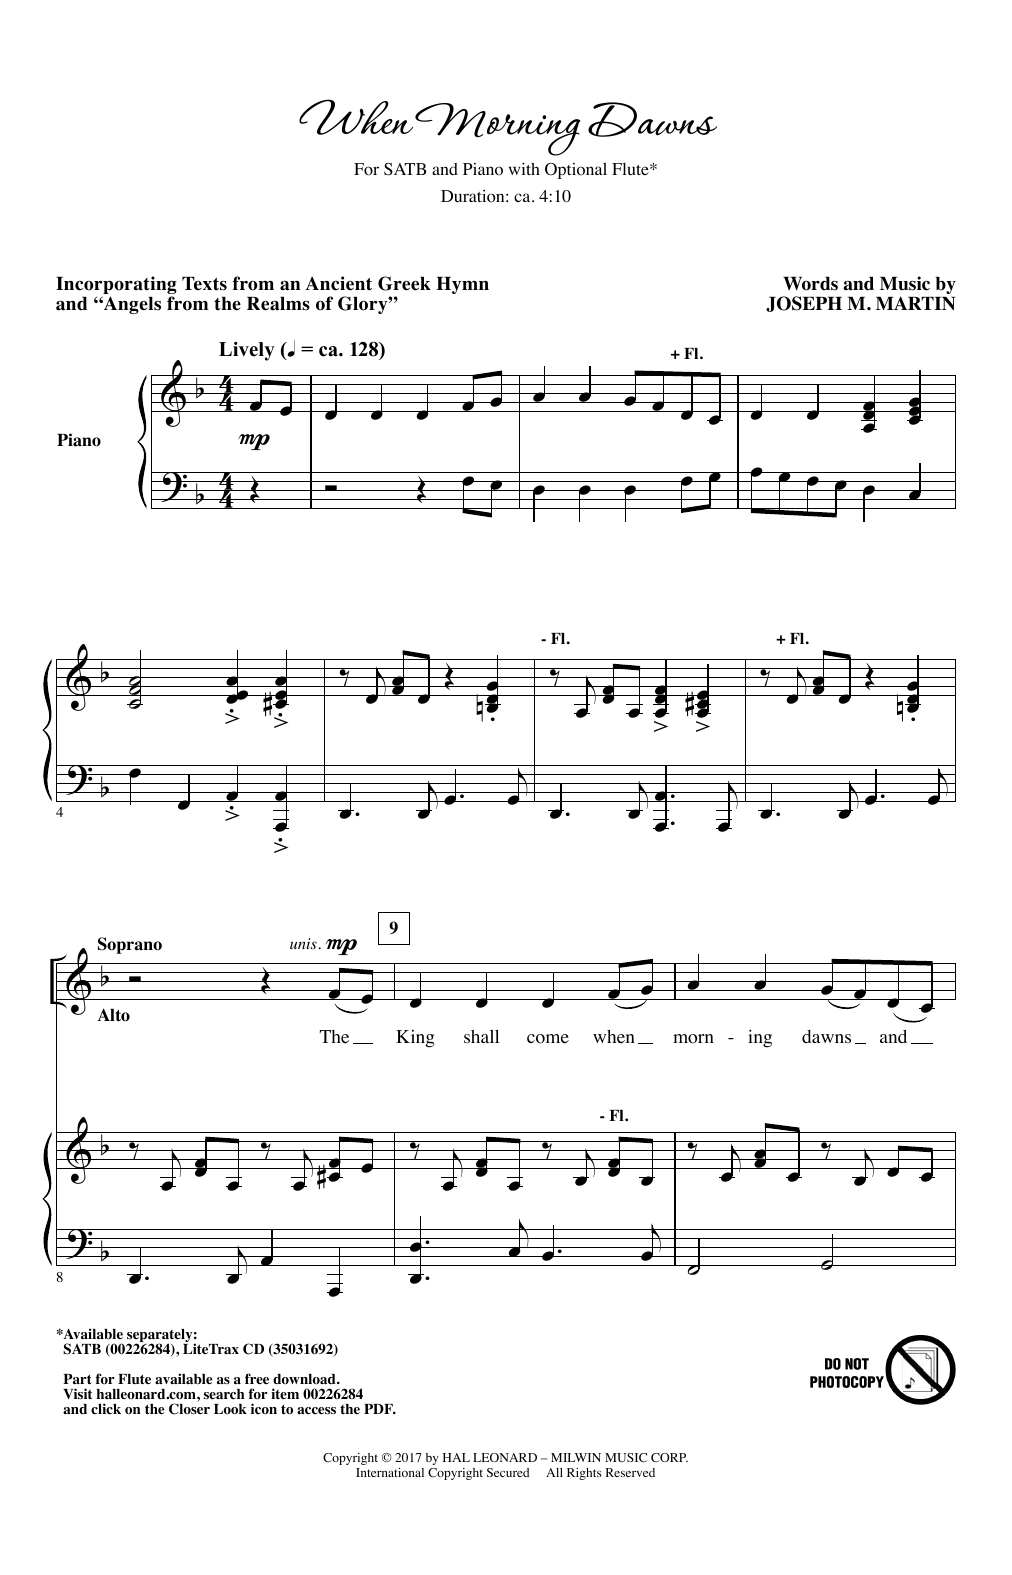 Joseph M. Martin When Morning Dawns sheet music notes and chords arranged for SATB Choir